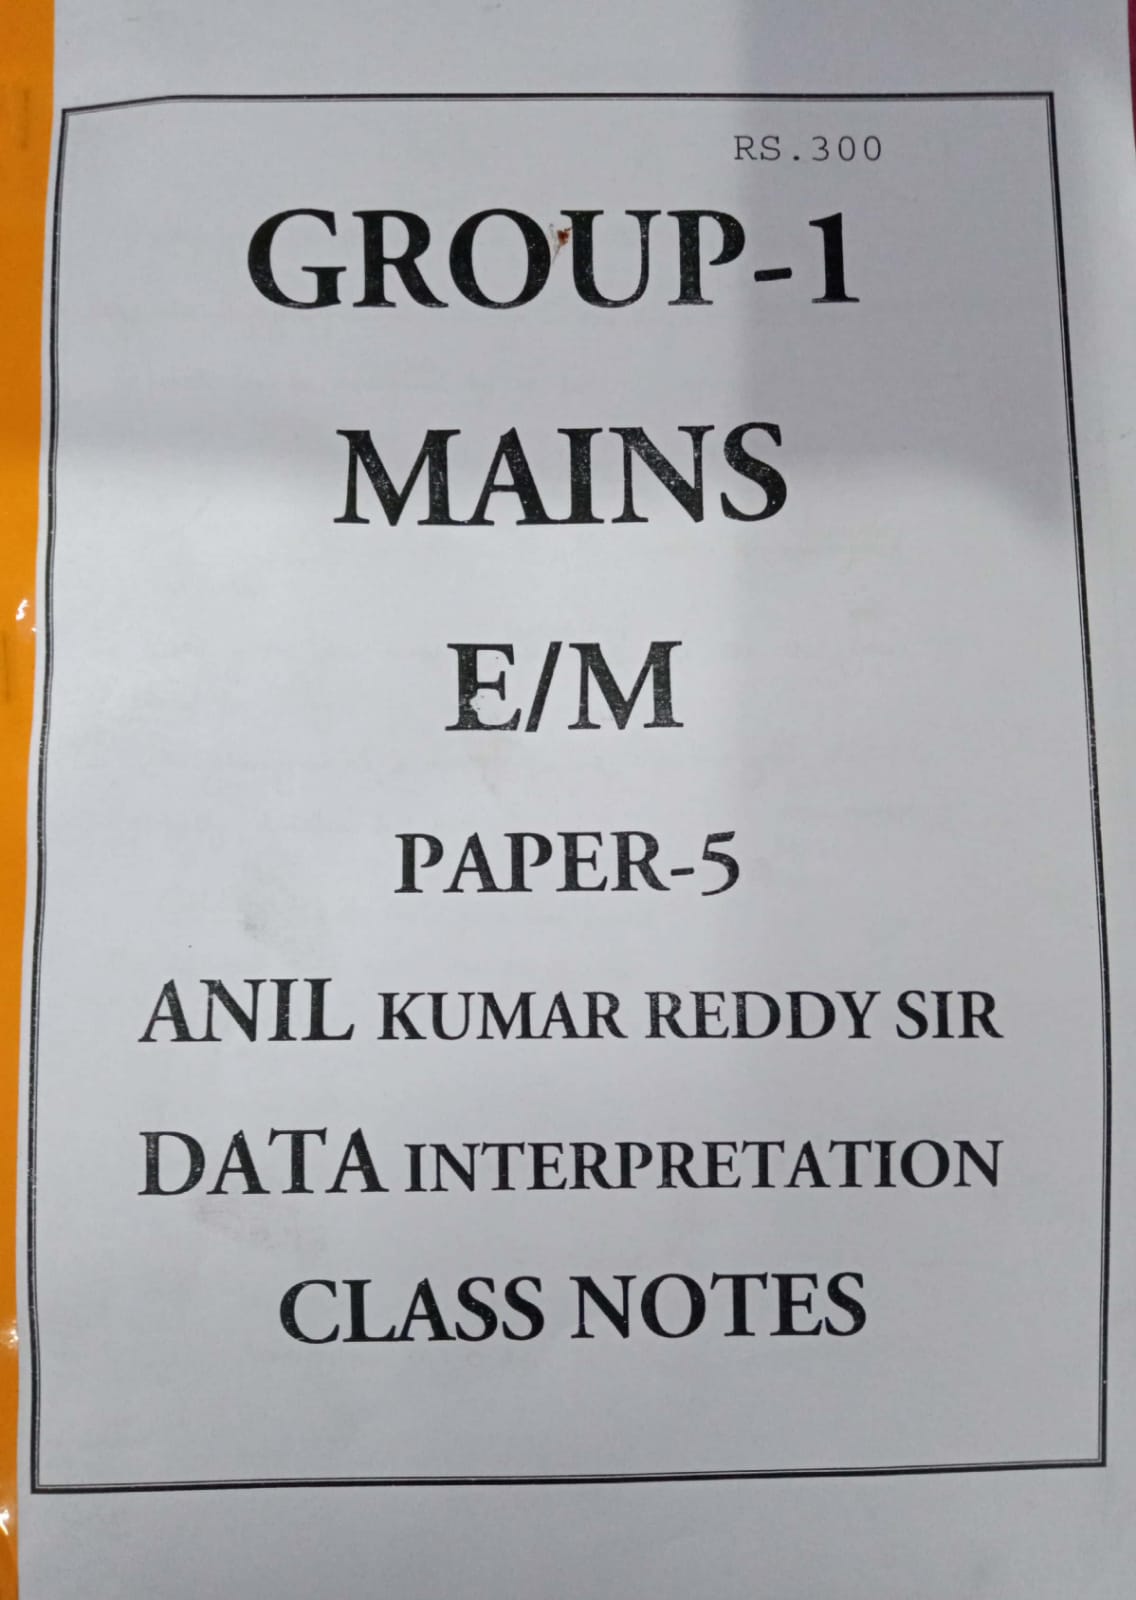 Group 1 Mains Paper 5 Data Interpretation DI Class Notes By Anil Kumar Reddy Sir [ENGLISH MEDIUM] XEROX PRINTED MATERIAL